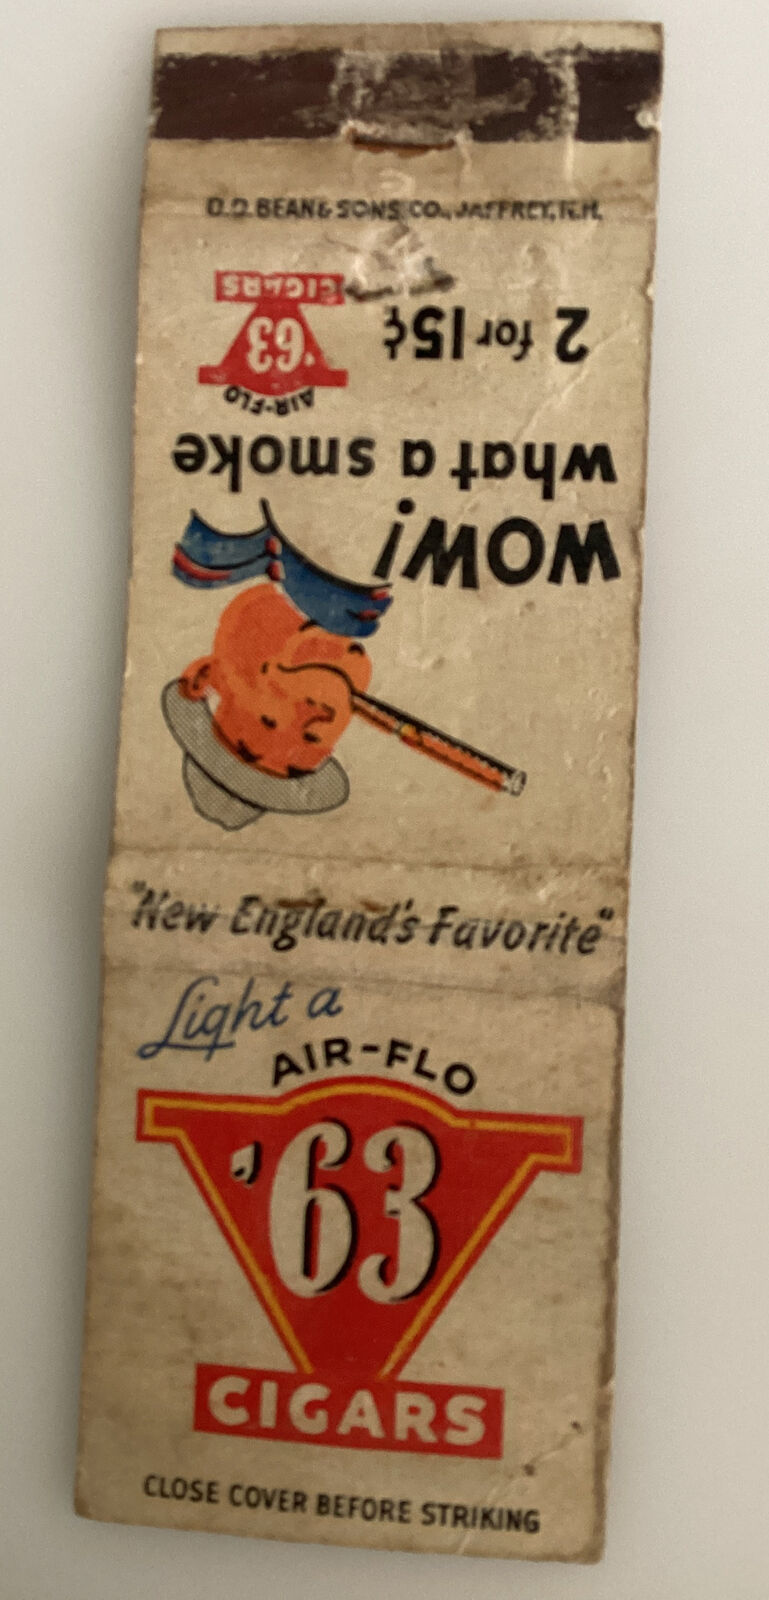 Vintage D D Beans Jaffrey NH Air-Flo ‘63 Cigars Matchbook New England Fav Smoke